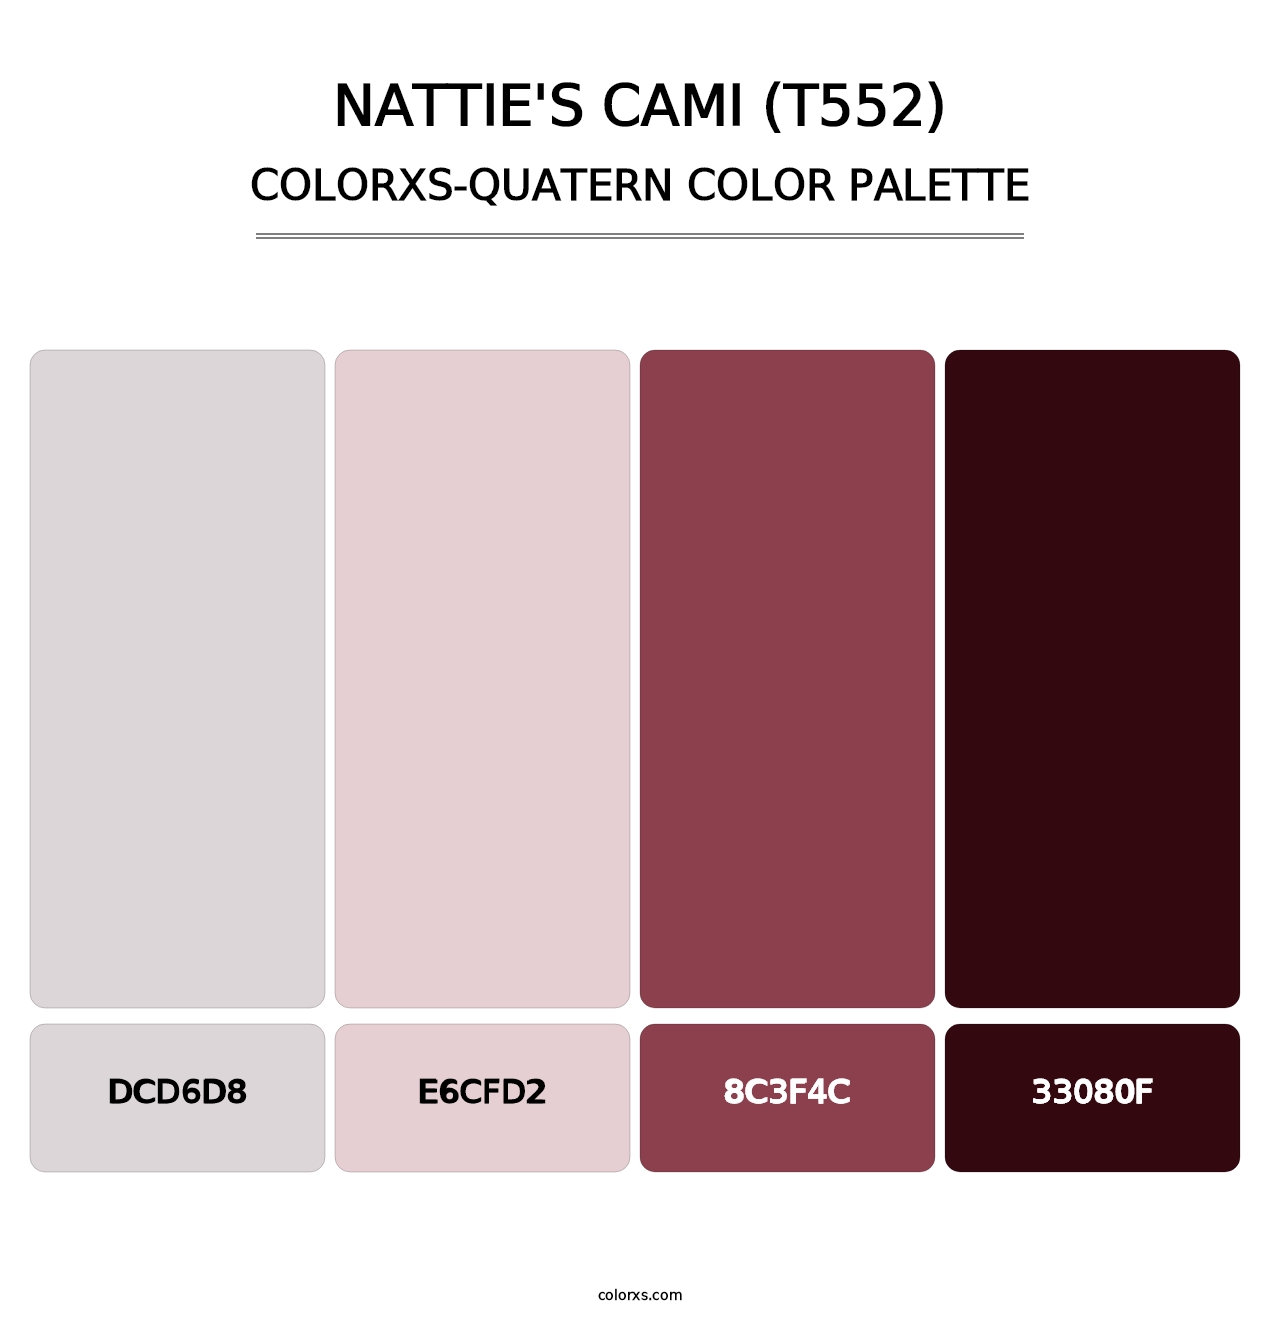 Nattie's Cami (T552) - Colorxs Quatern Palette